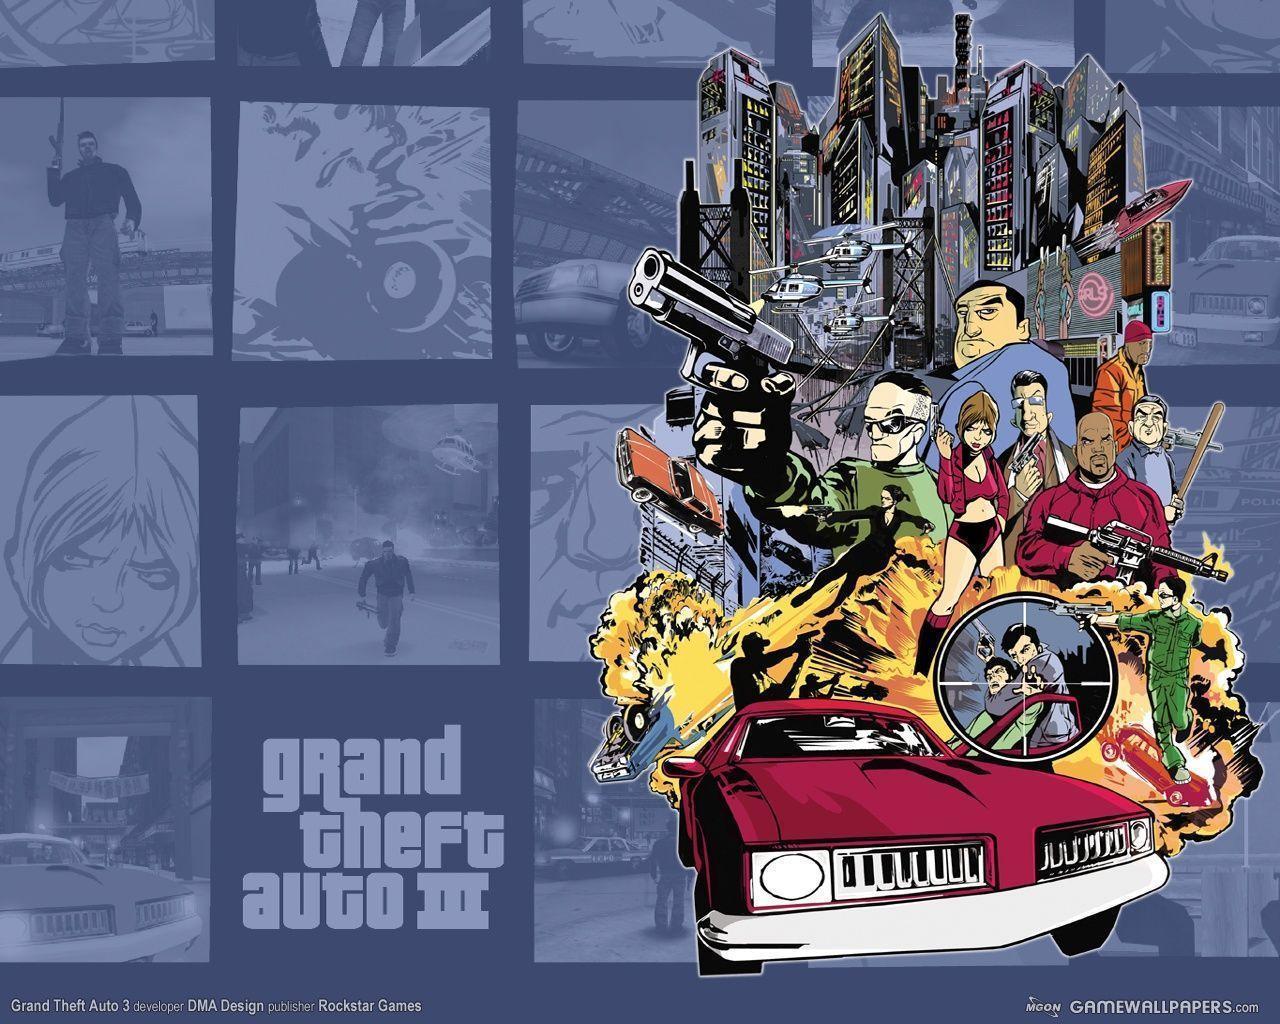 Grand Theft Auto III Wallpaper